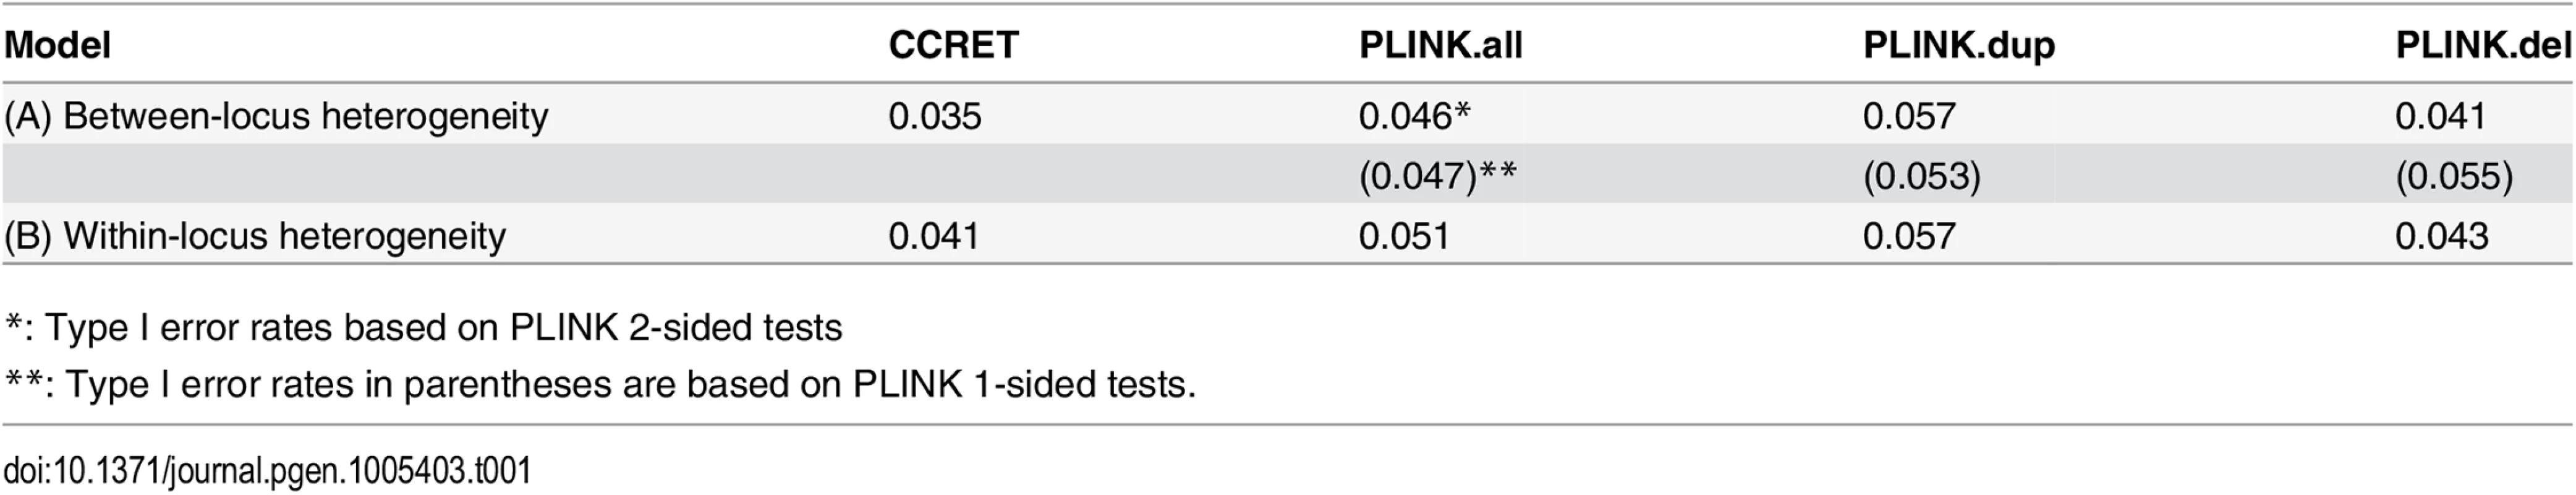 Type I error rates for evaluating dosage effects (nominal alpha = 0.05).